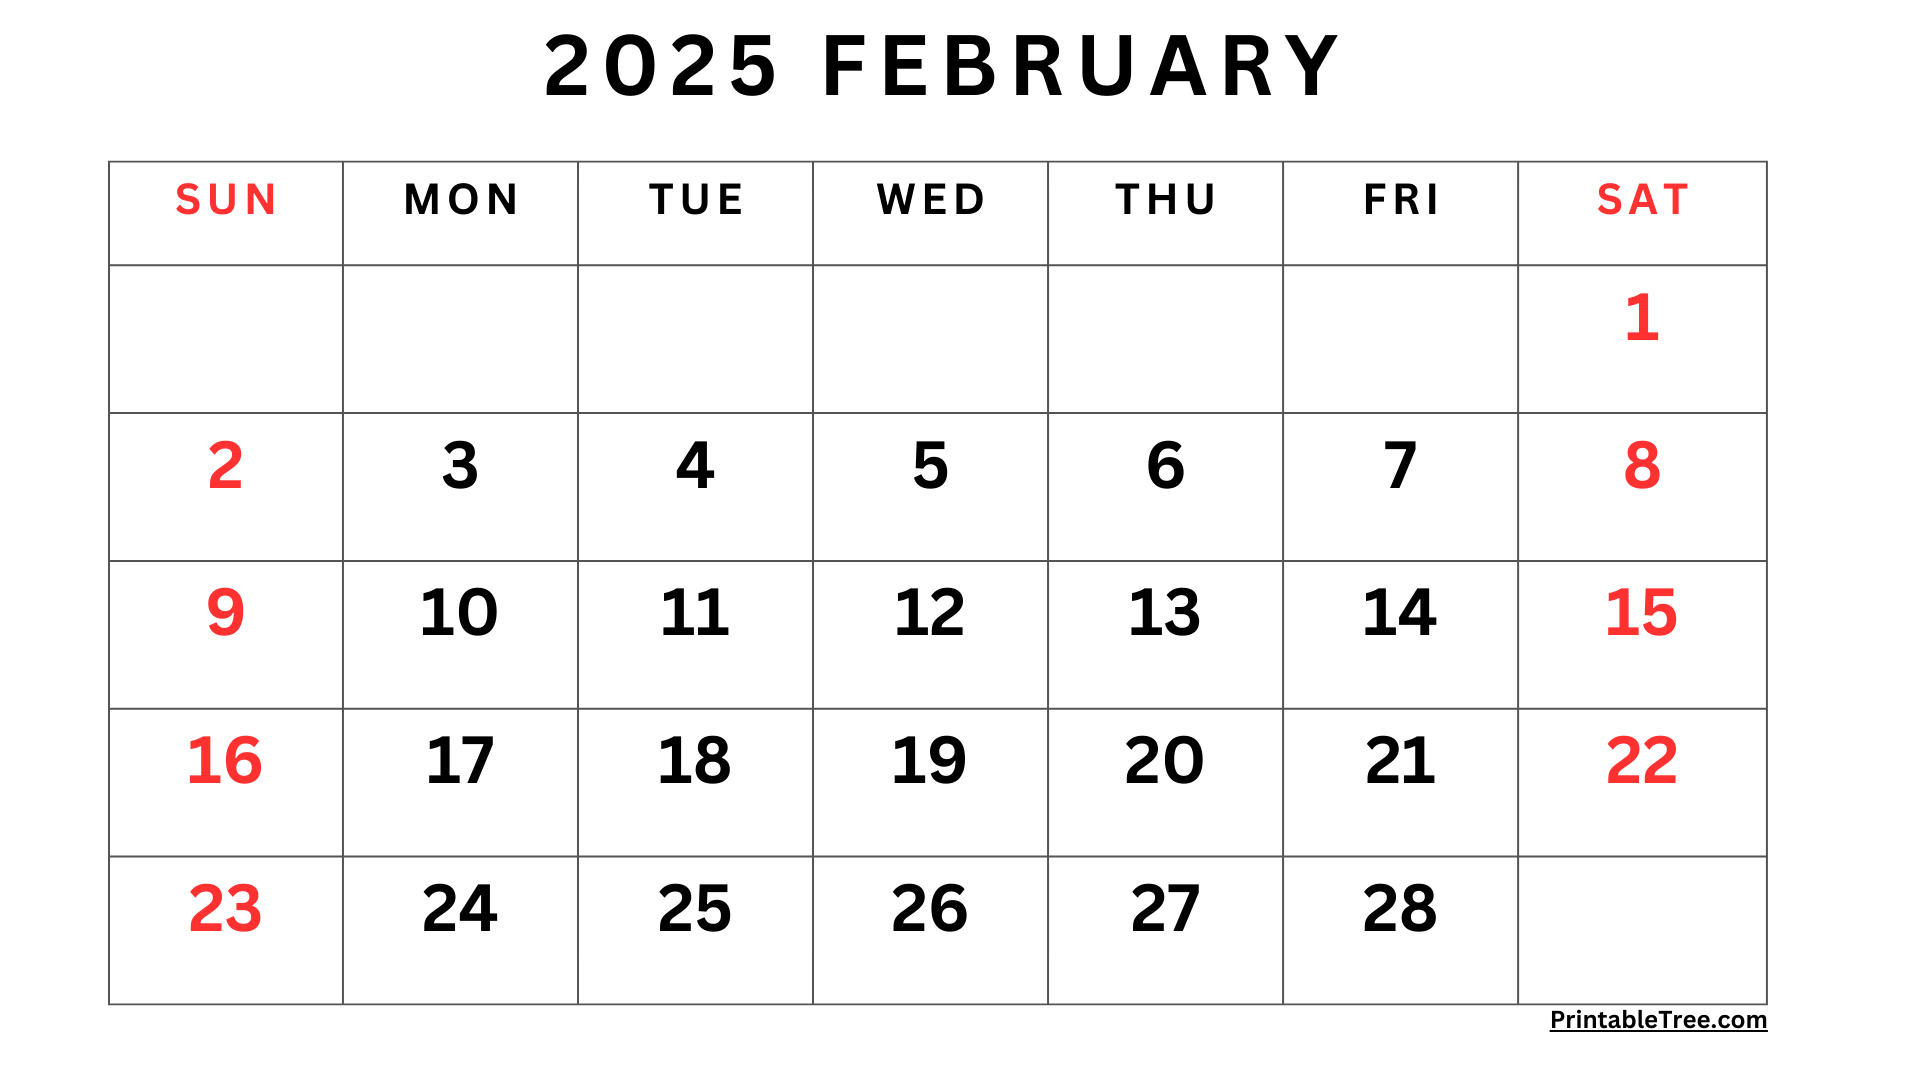 february-2025-calendar-free-blank-printable-with-holidays